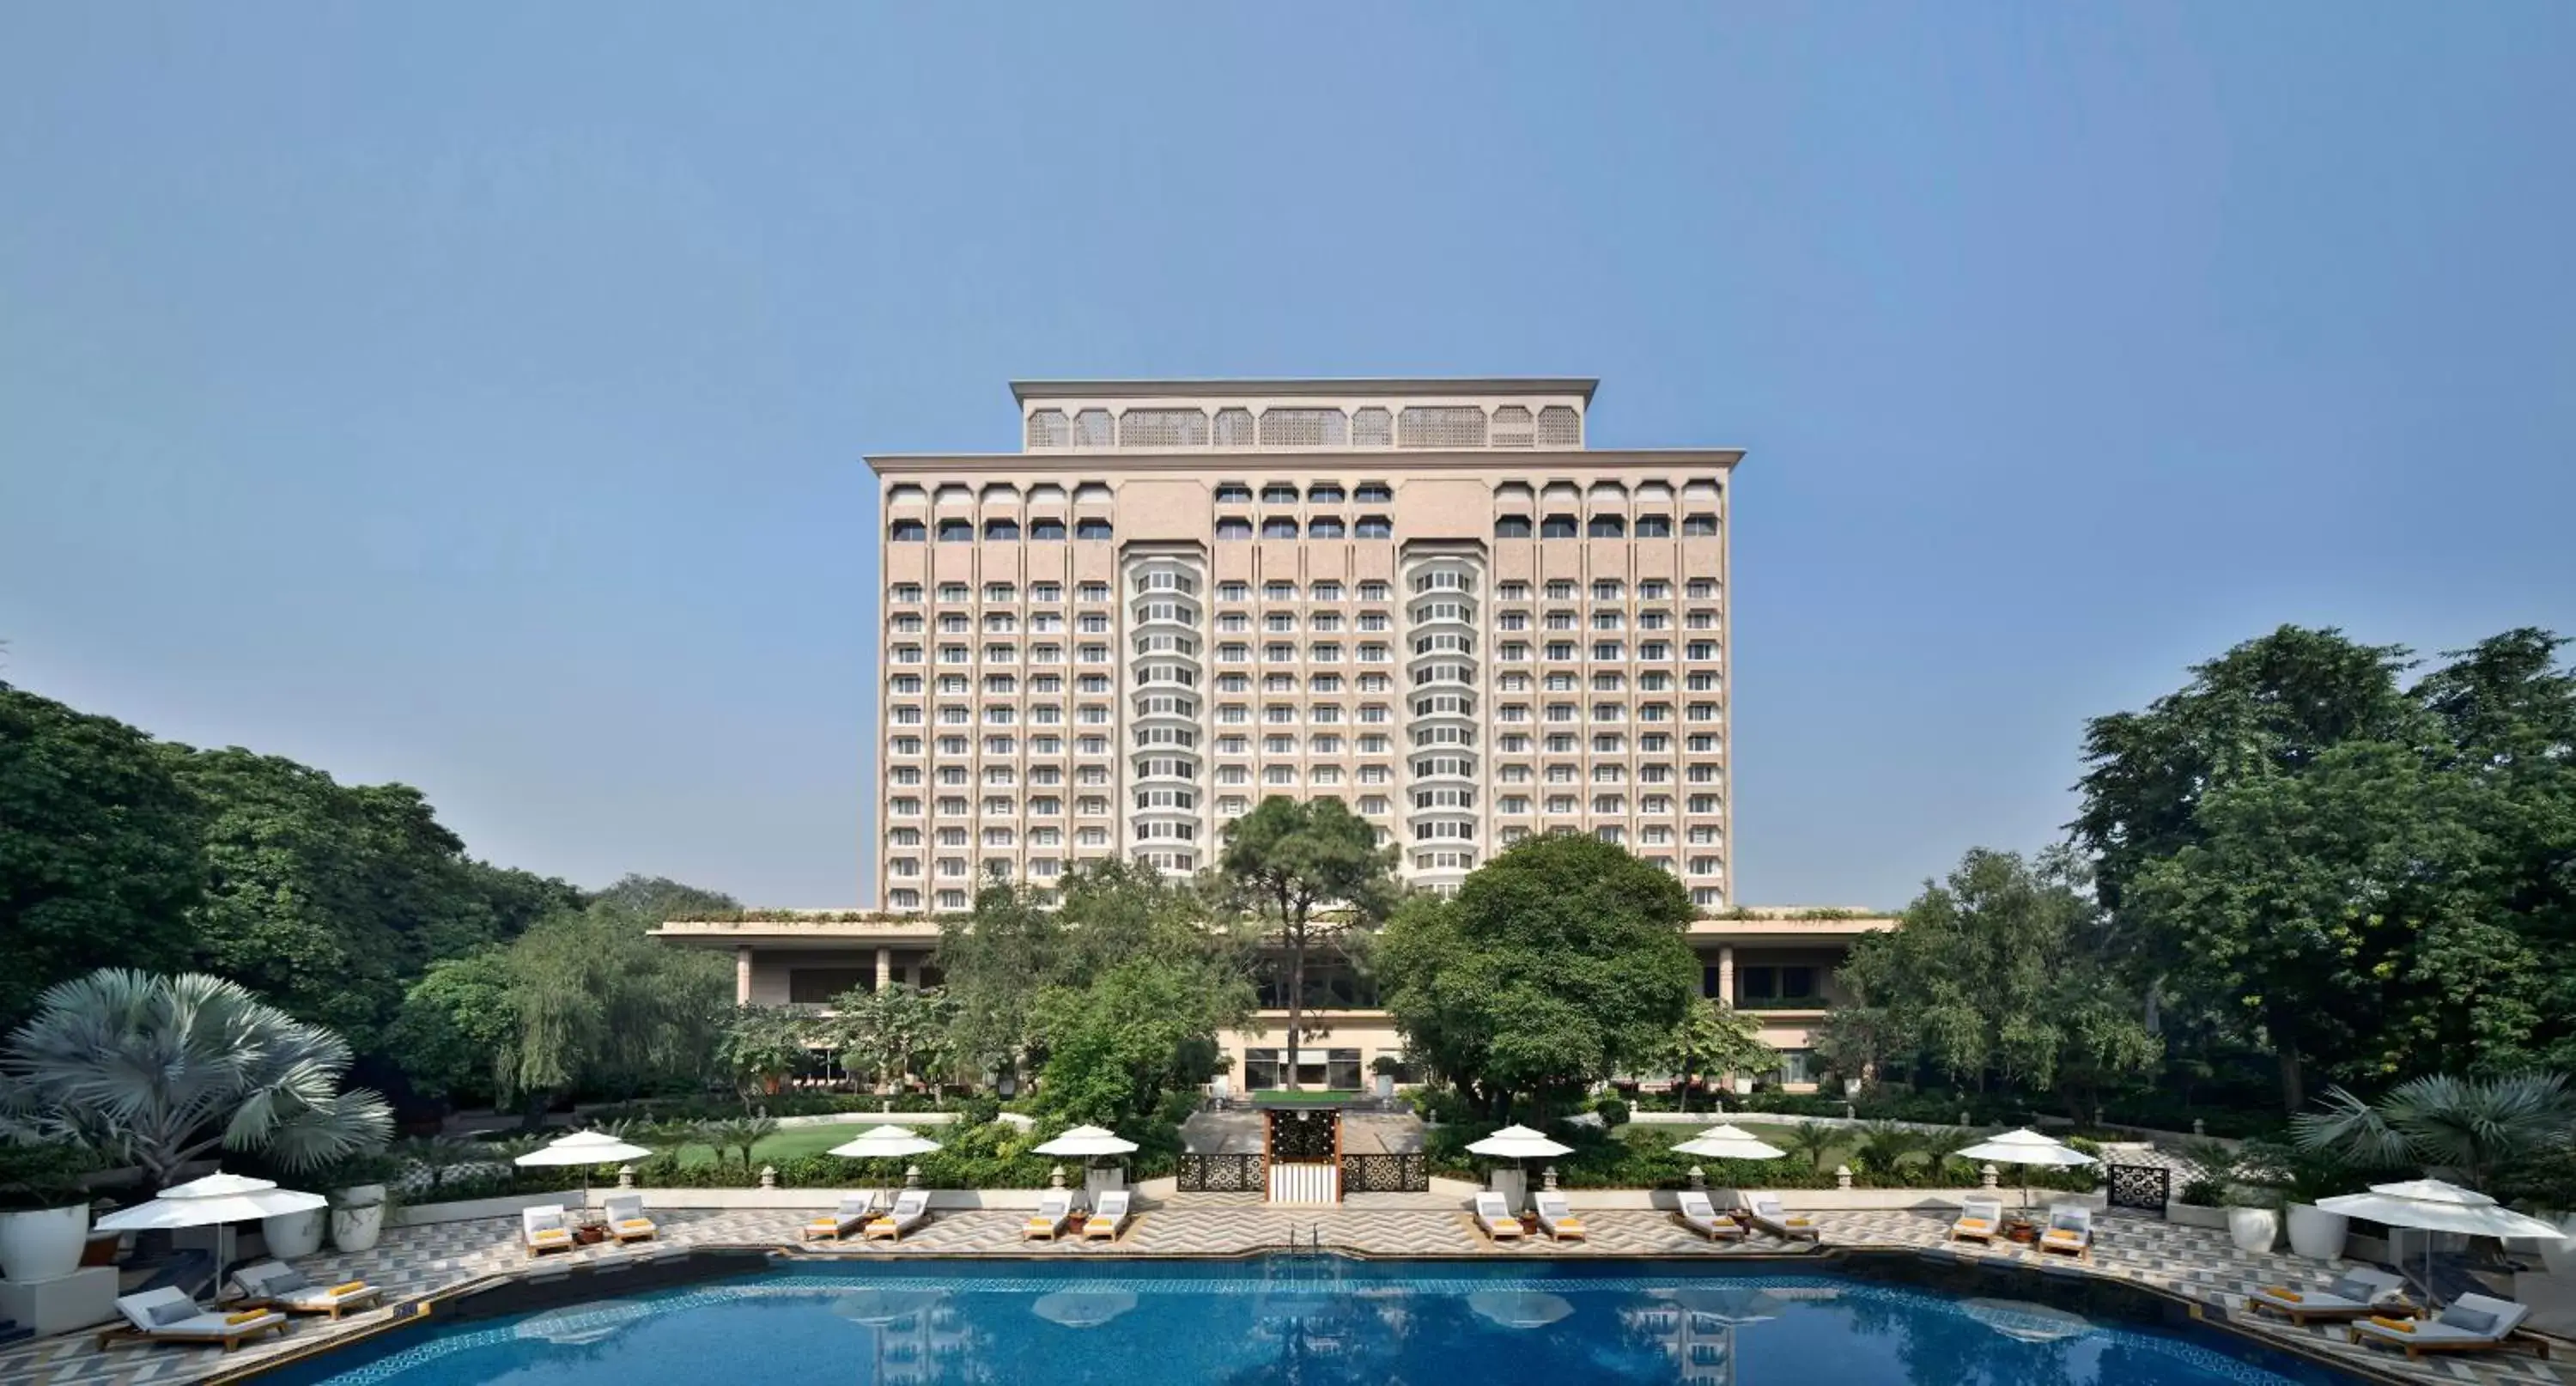 Property building, Swimming Pool in Taj Mahal, New Delhi